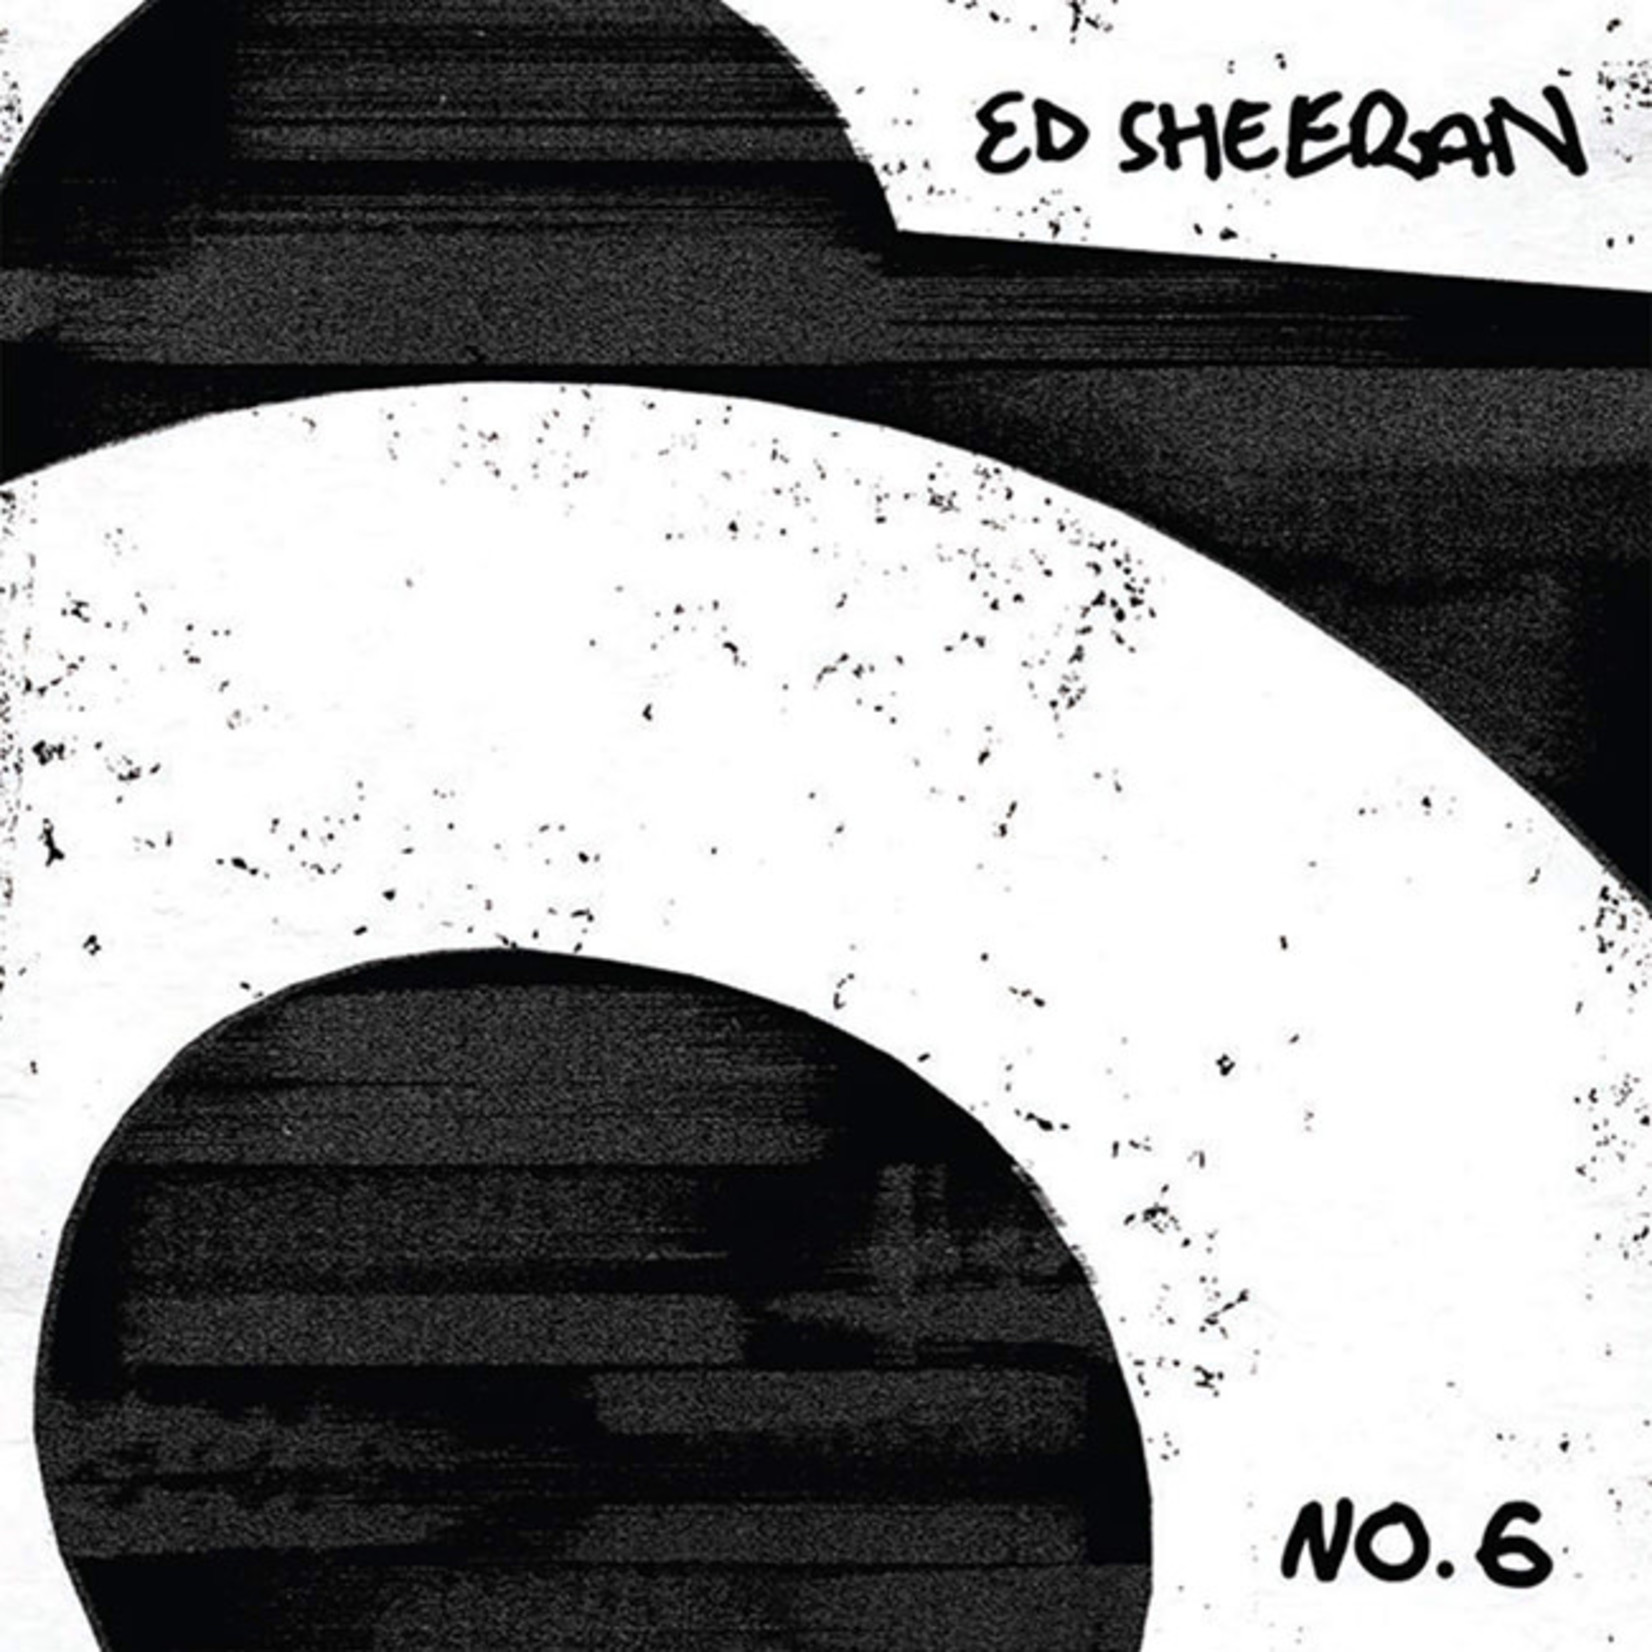 [New] Ed Sheeran - No.6 Collaborations (2LP)